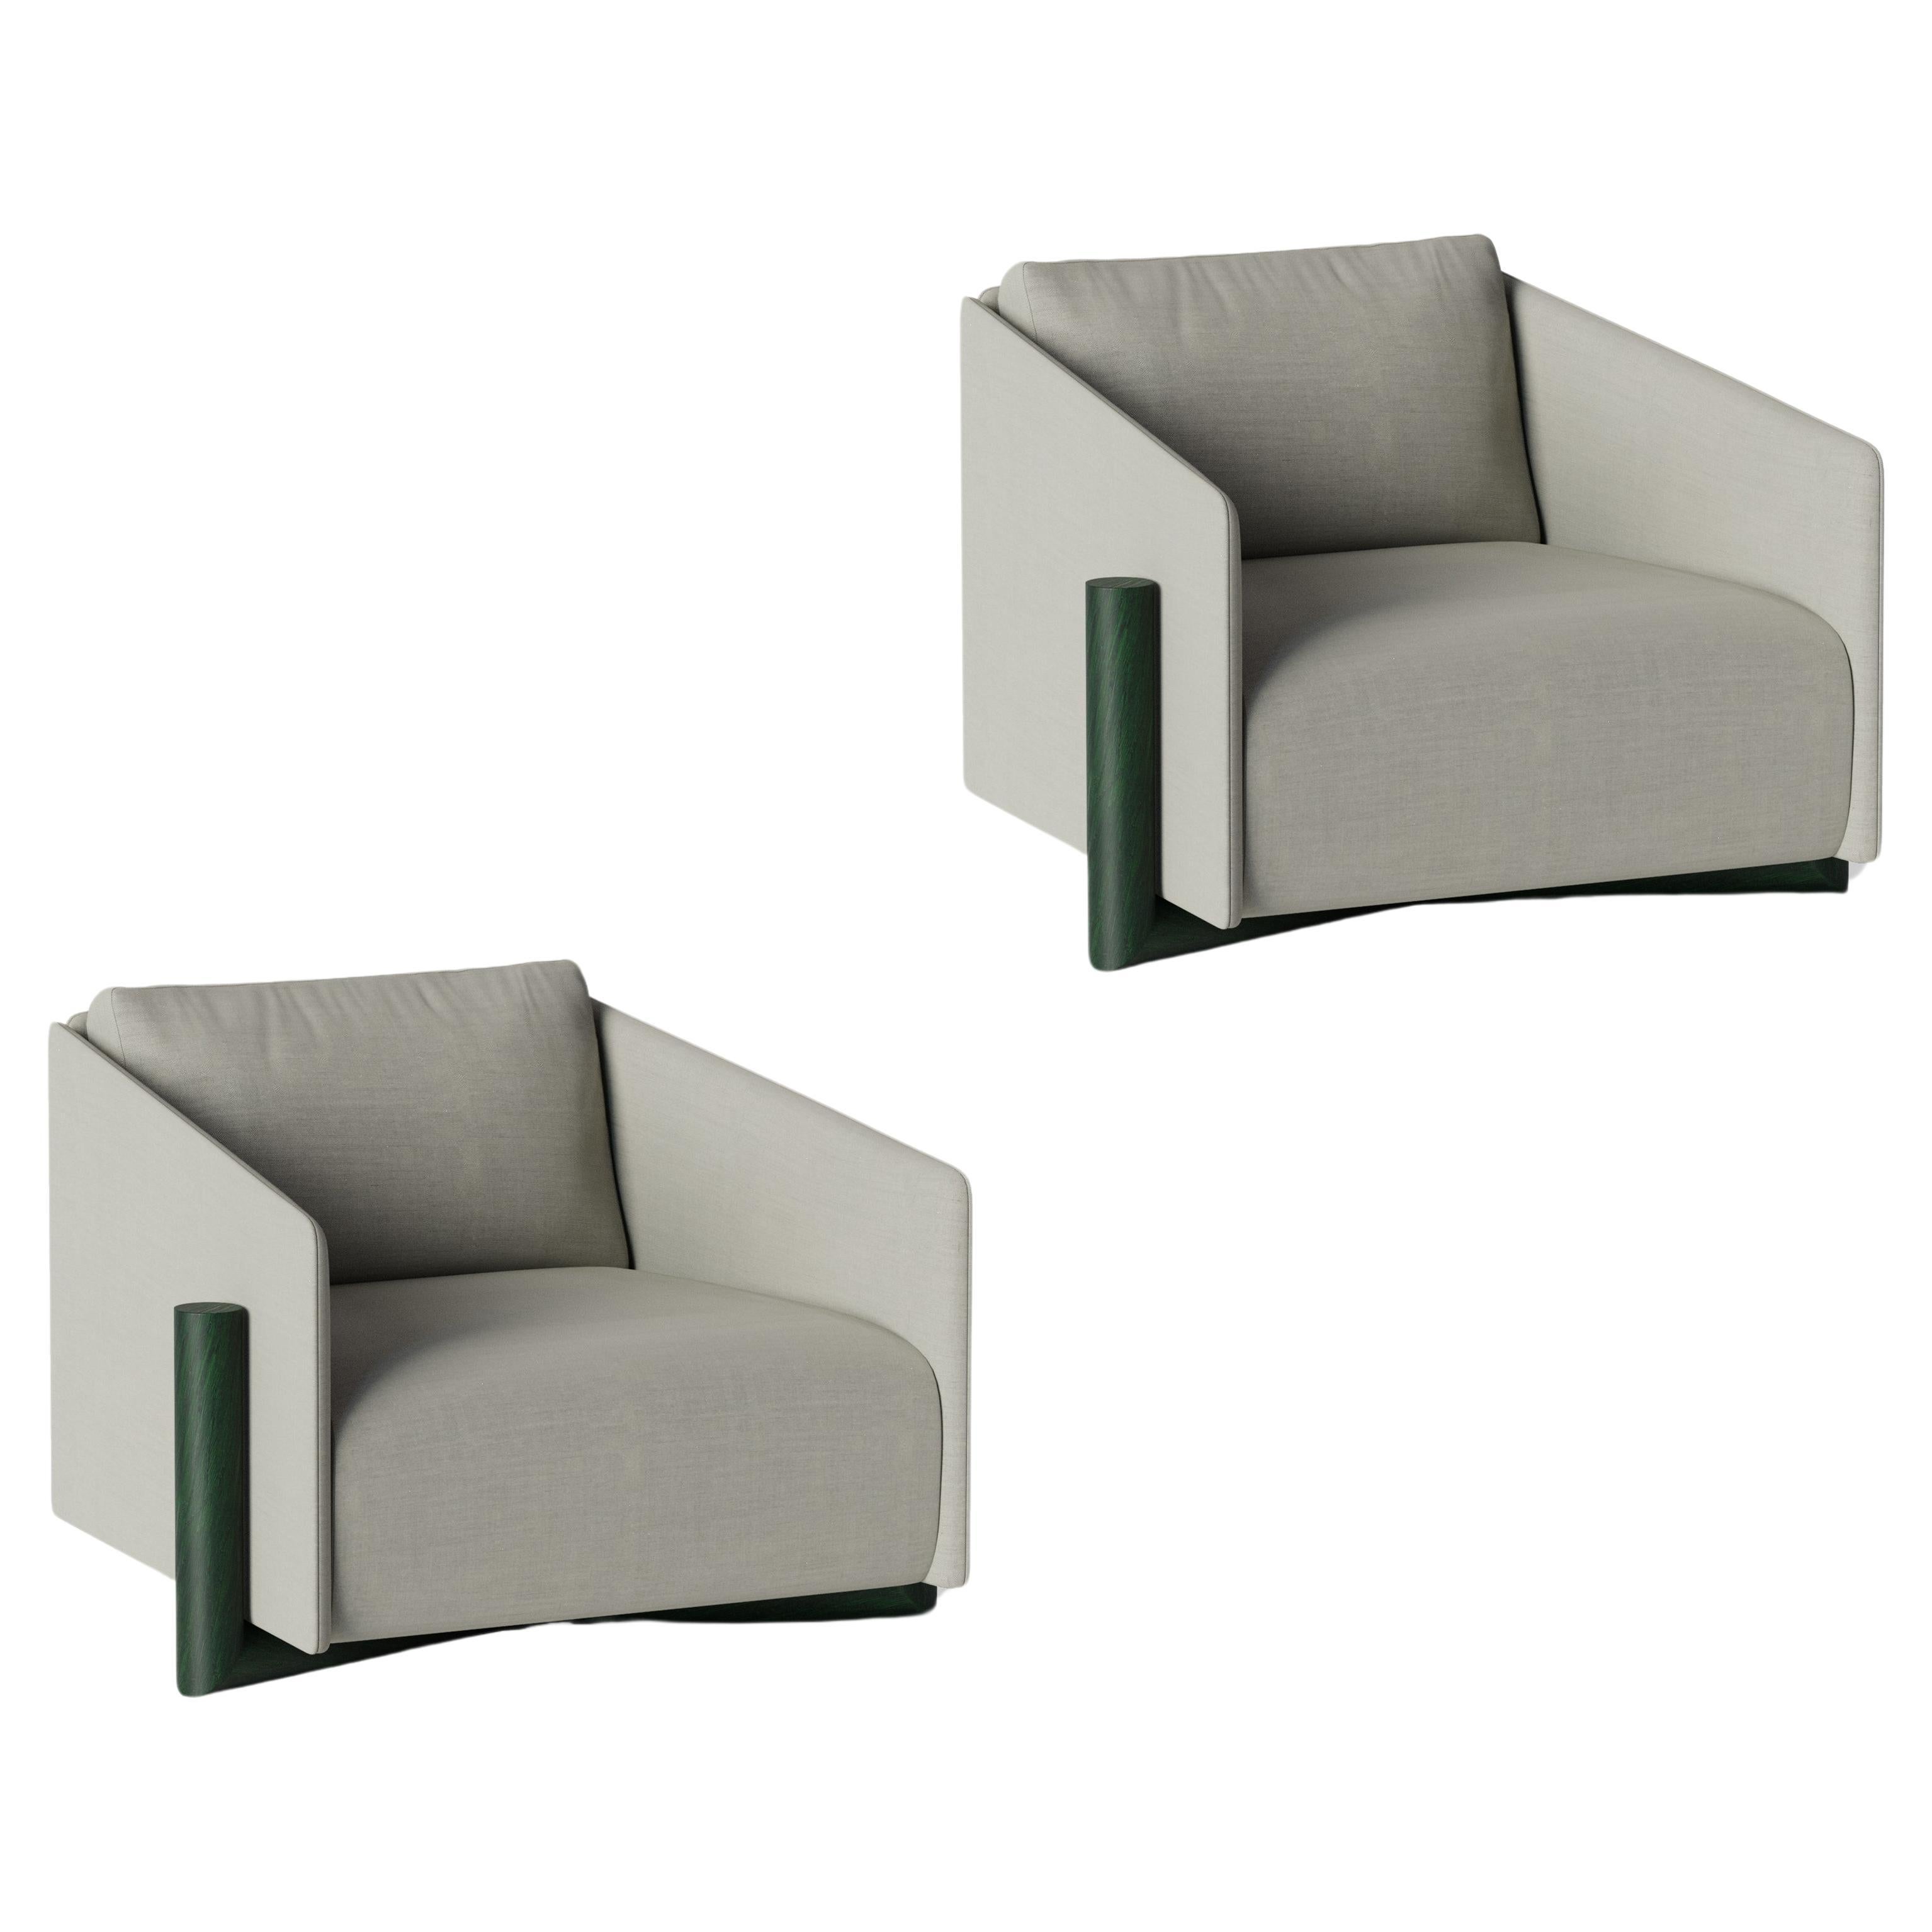 Set of 2 Grey Timber Armchair by Kann Design